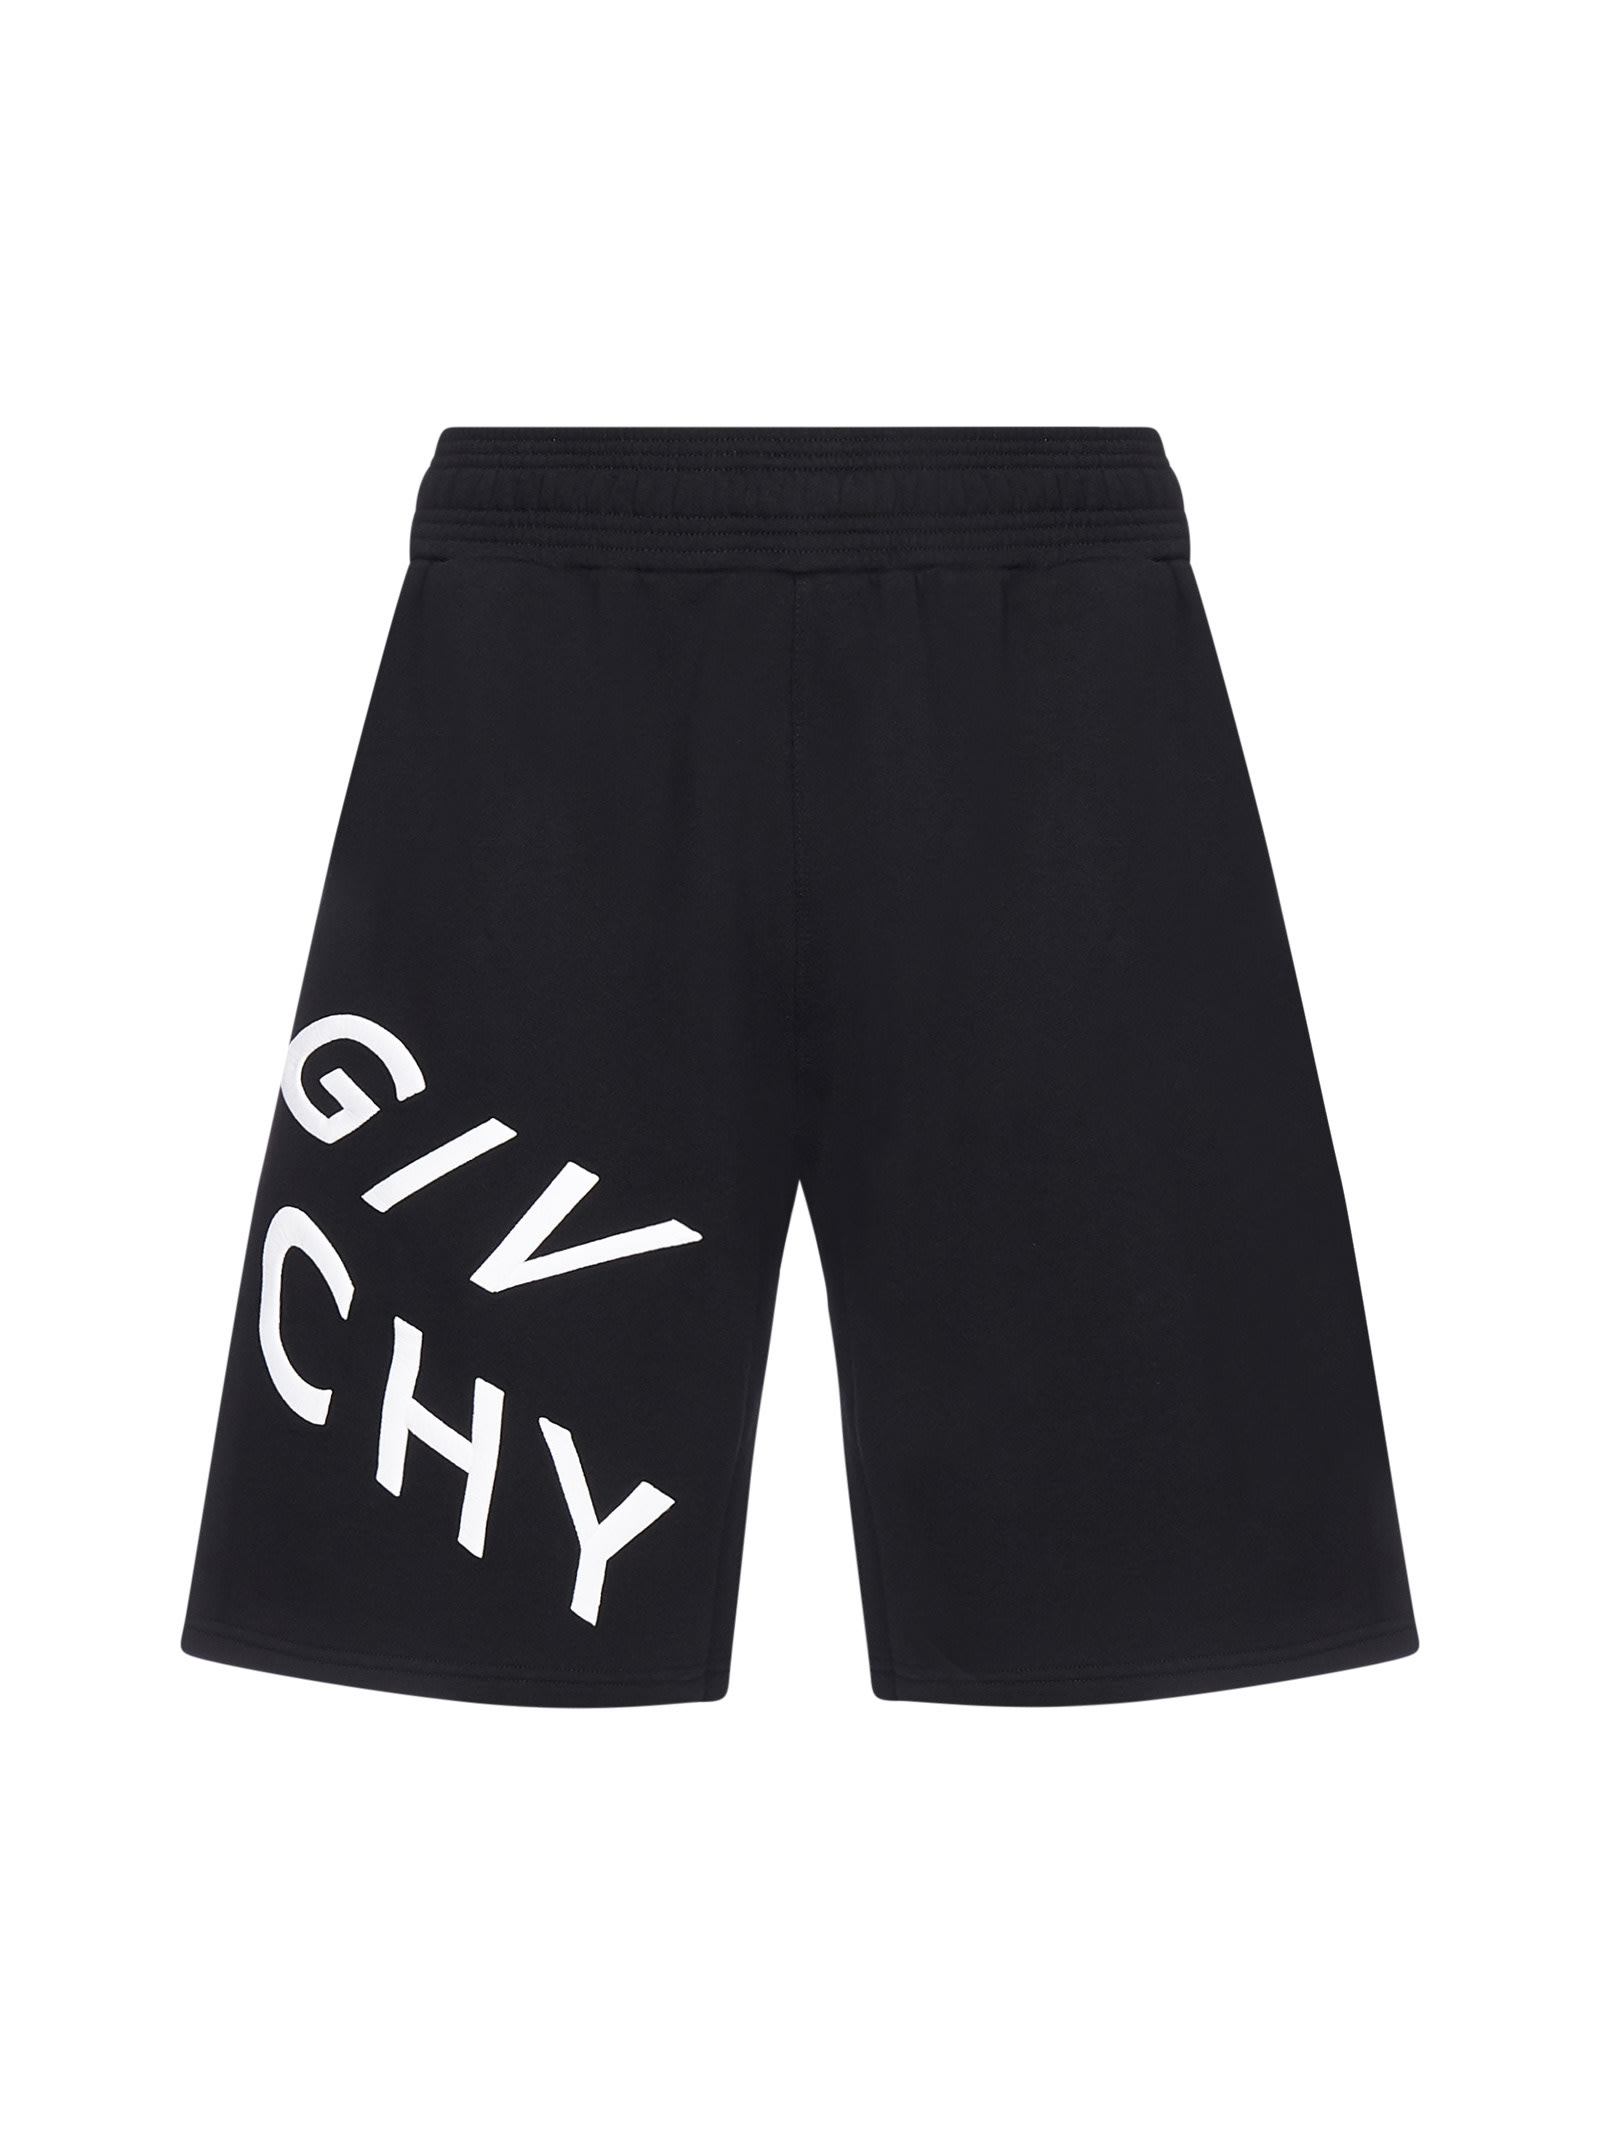 Givenchy Refracted Logo Cotton Shorts